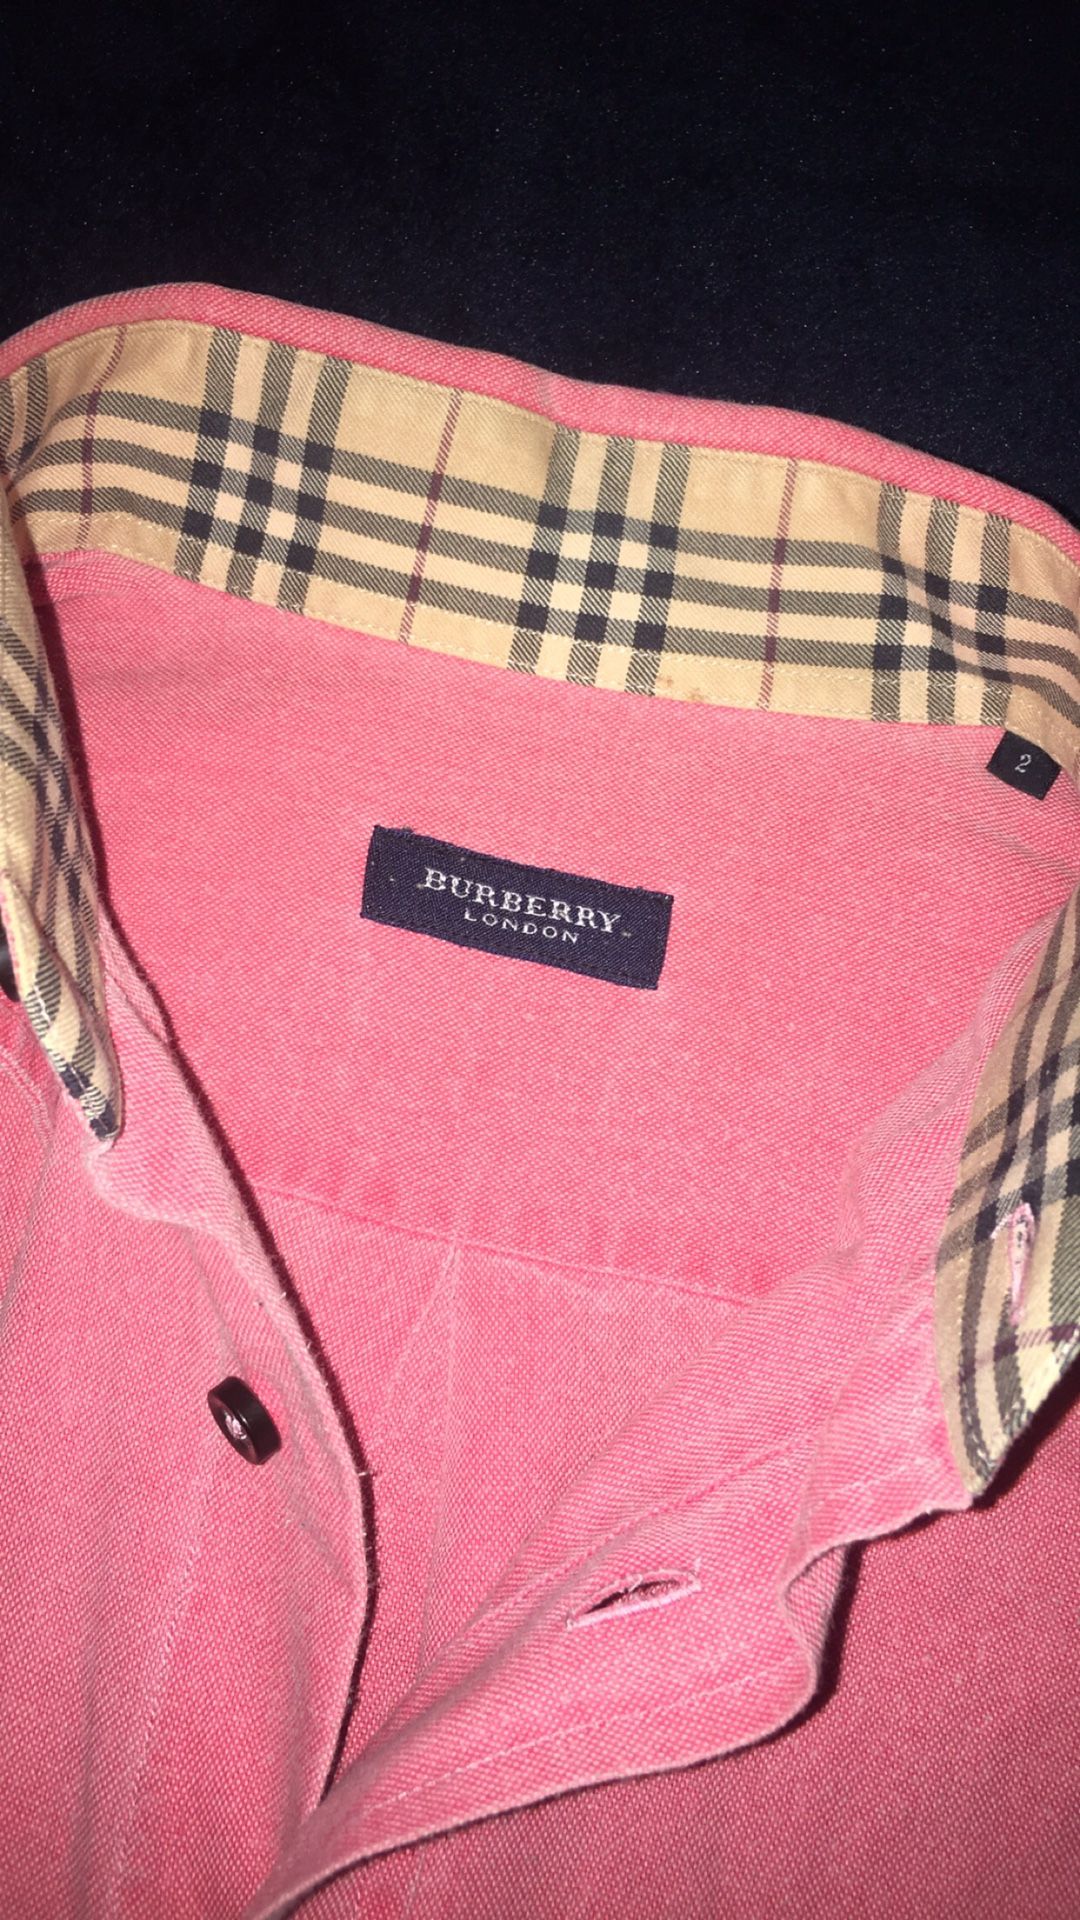 Men’s Burberry London Shirt Mens Large Red/Pink